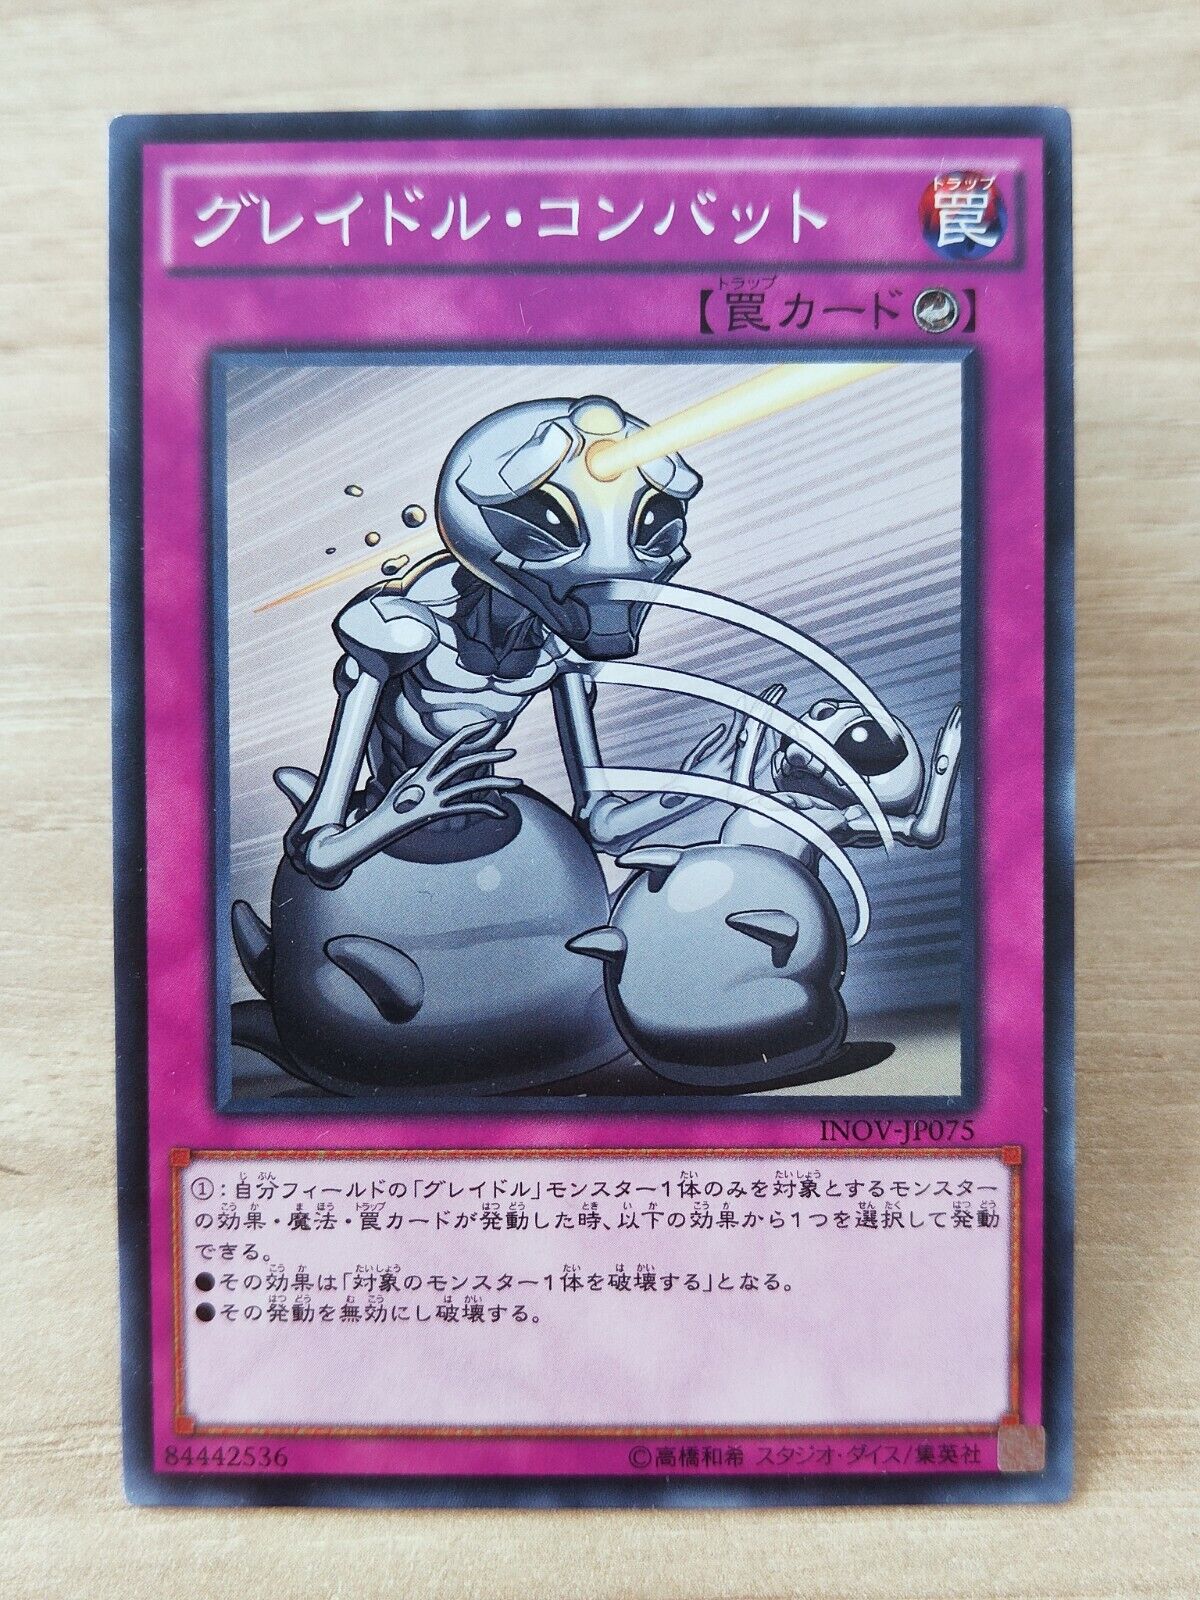 YU-GI-OH A80 Japanese Card Japan Konami Game Graydle Combat - INOV-JP075